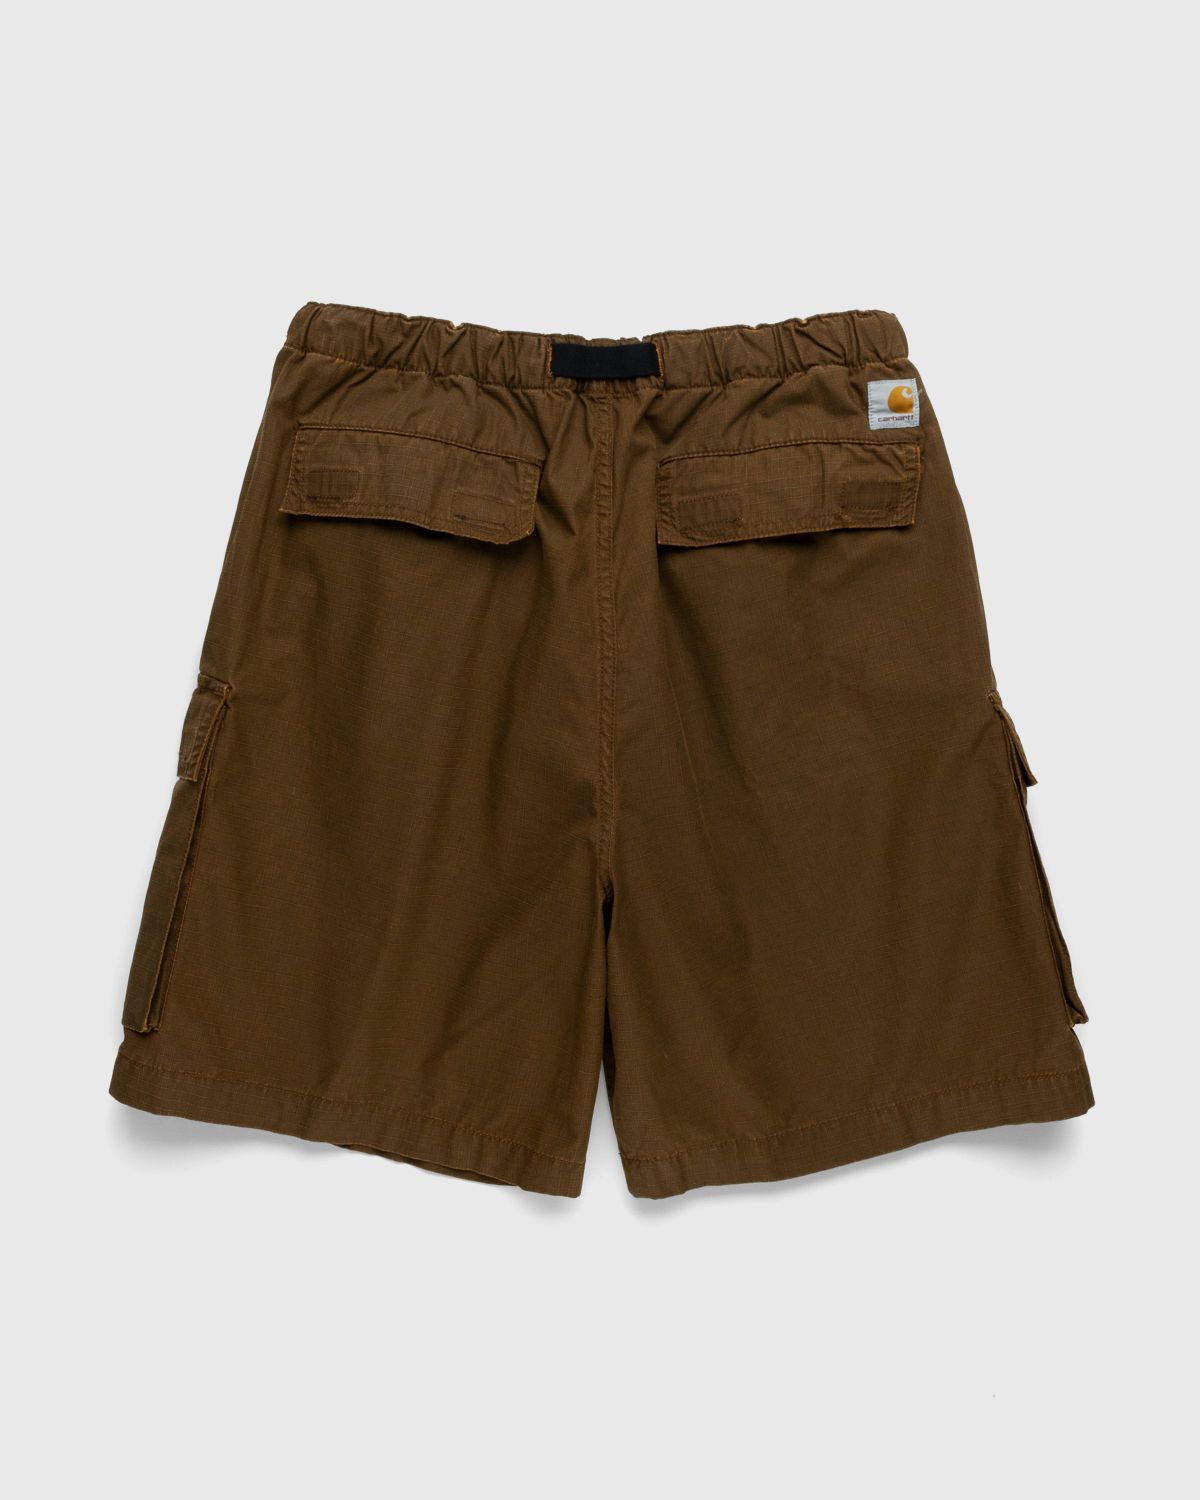 Carhartt WIP – Wynton Short Hamilton Brown - Cargo Shorts - Brown - Image 2